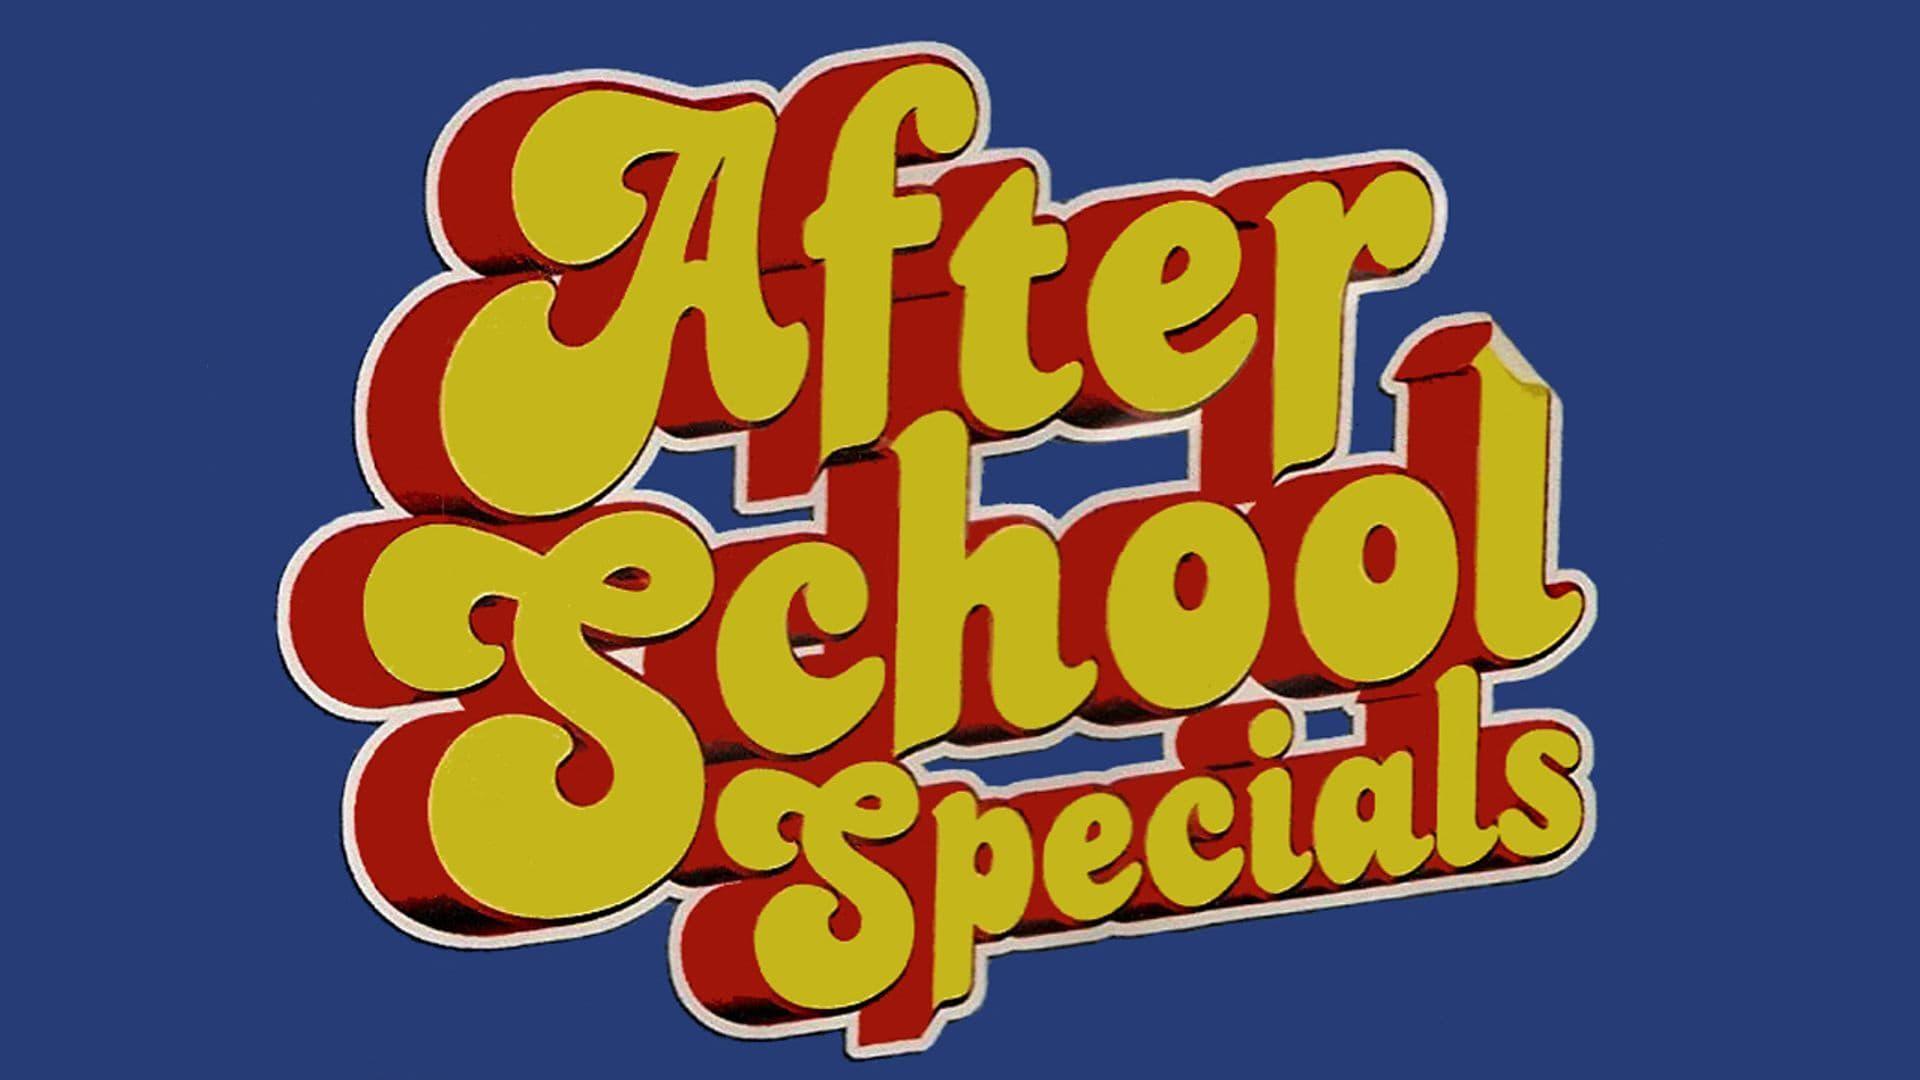 ABC Afterschool Special backdrop